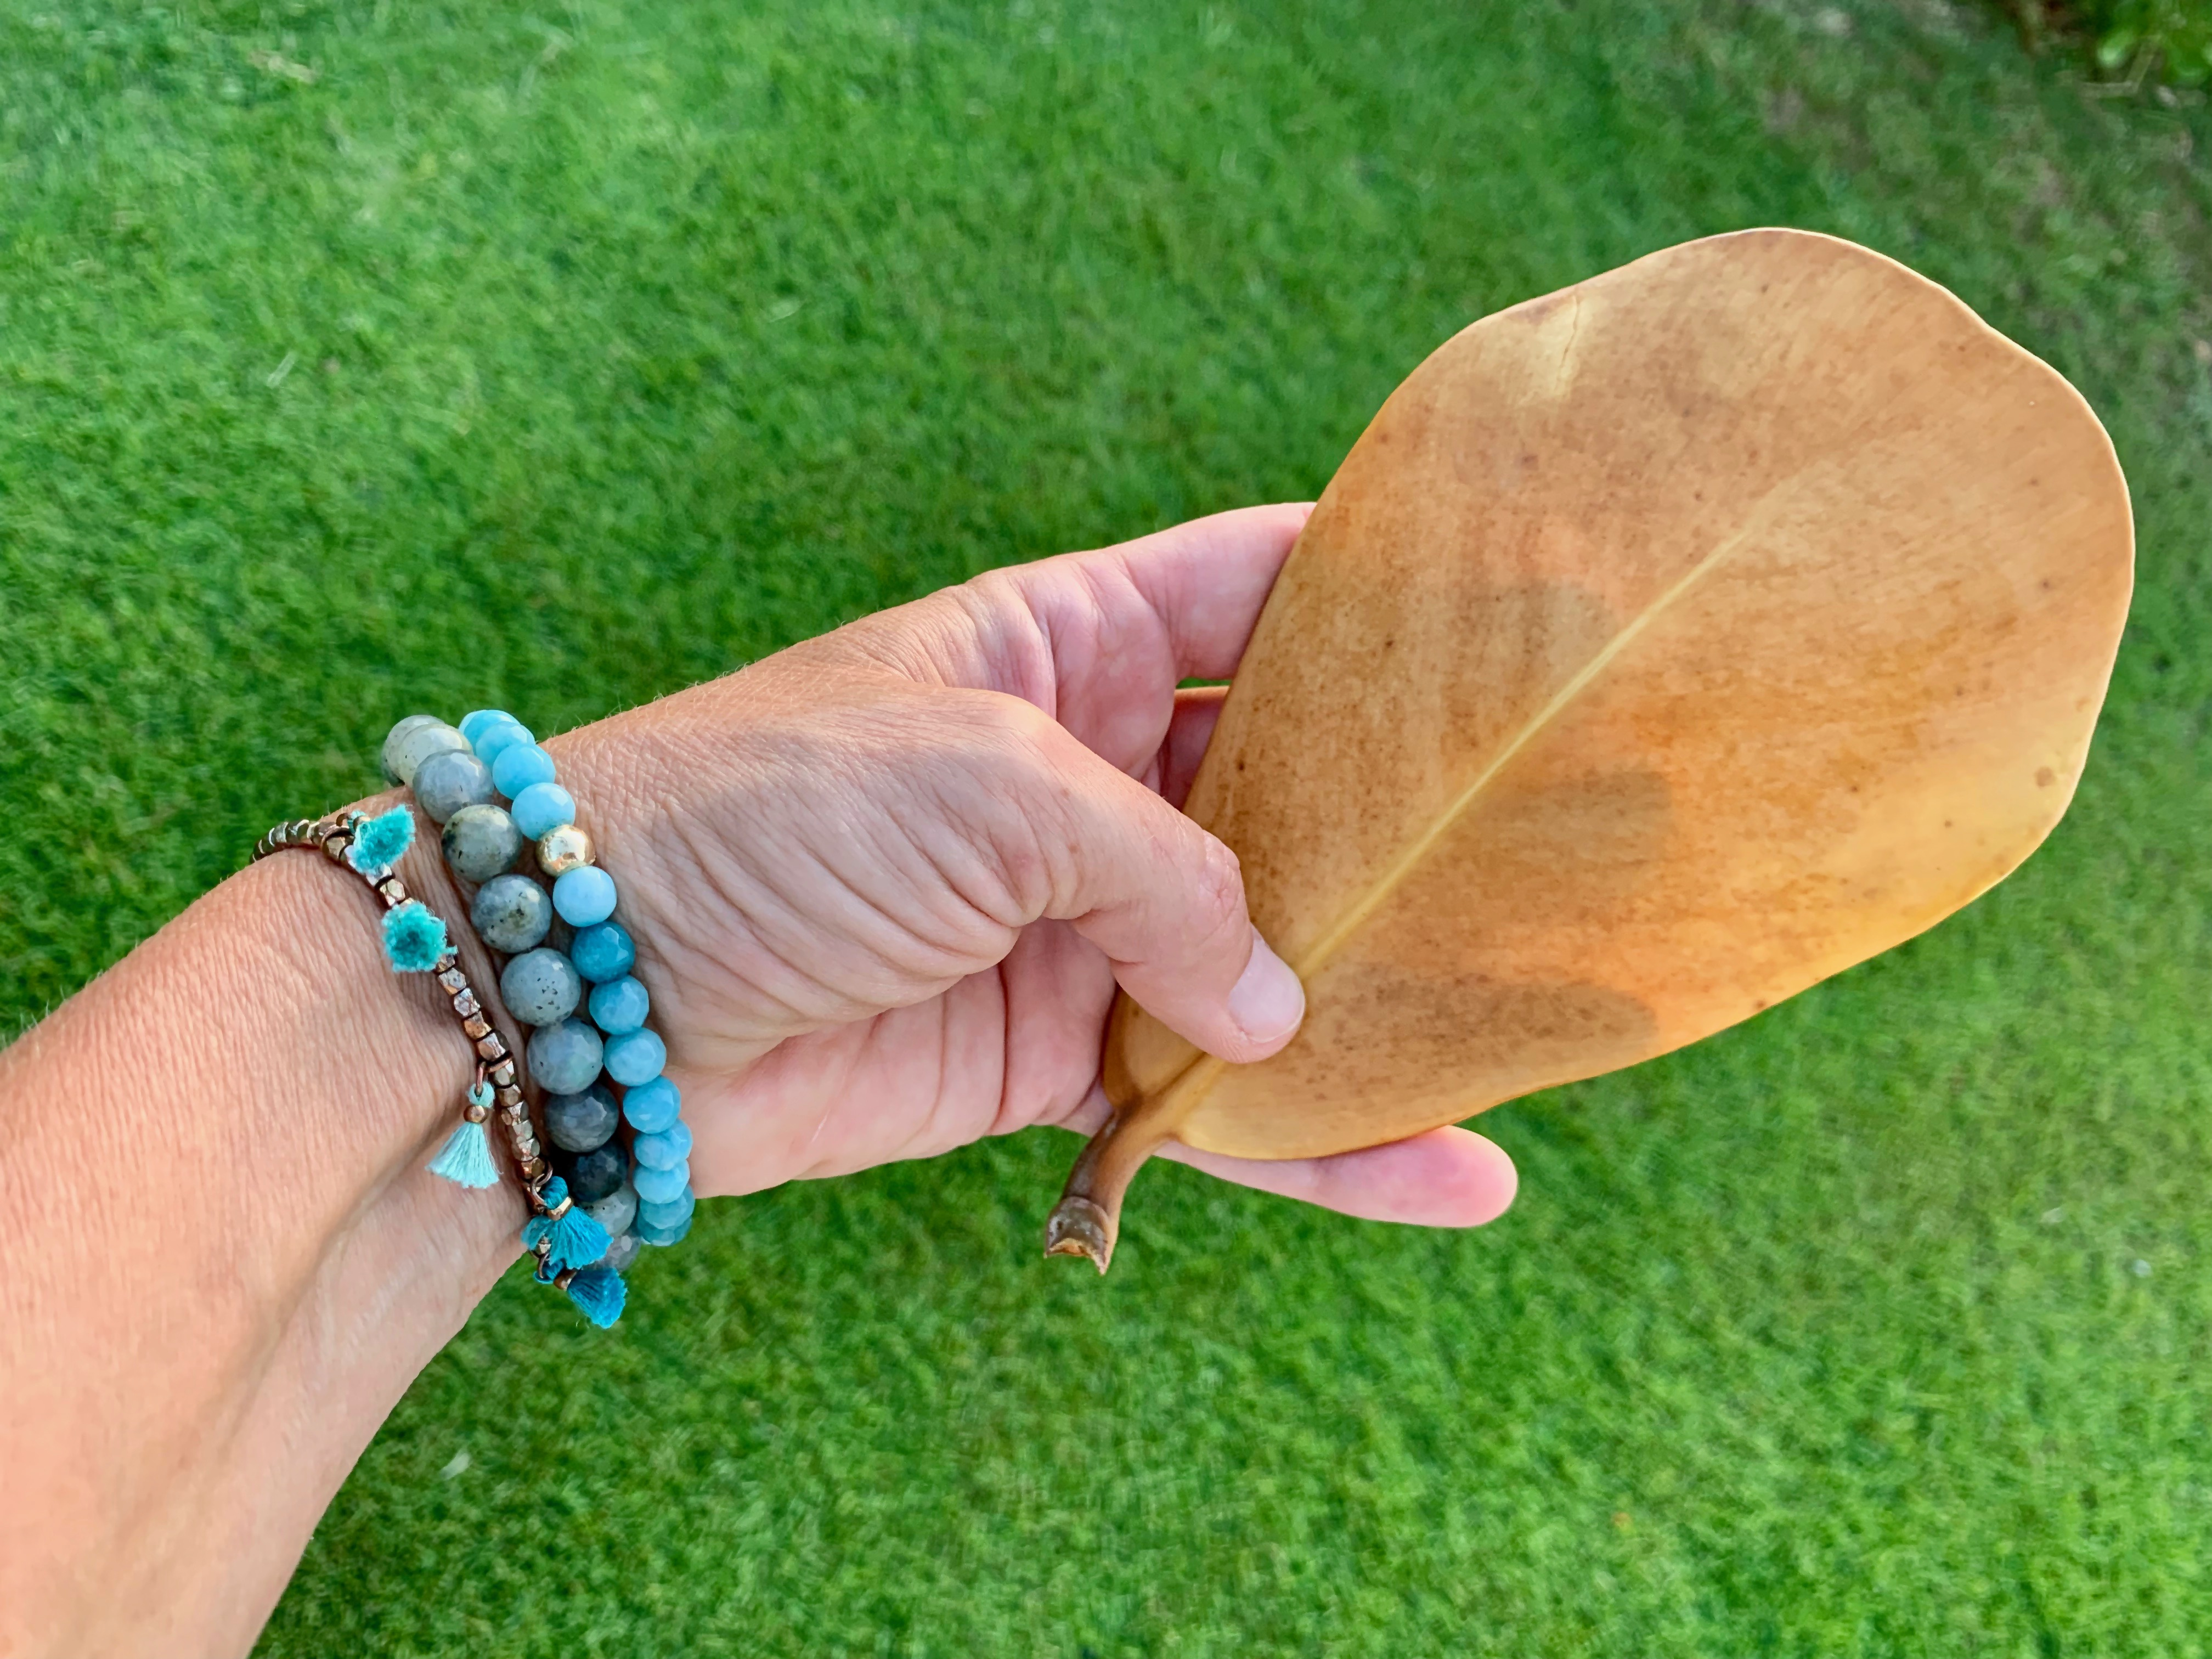 A hand holding a dry leaf displays blue bead bracelets